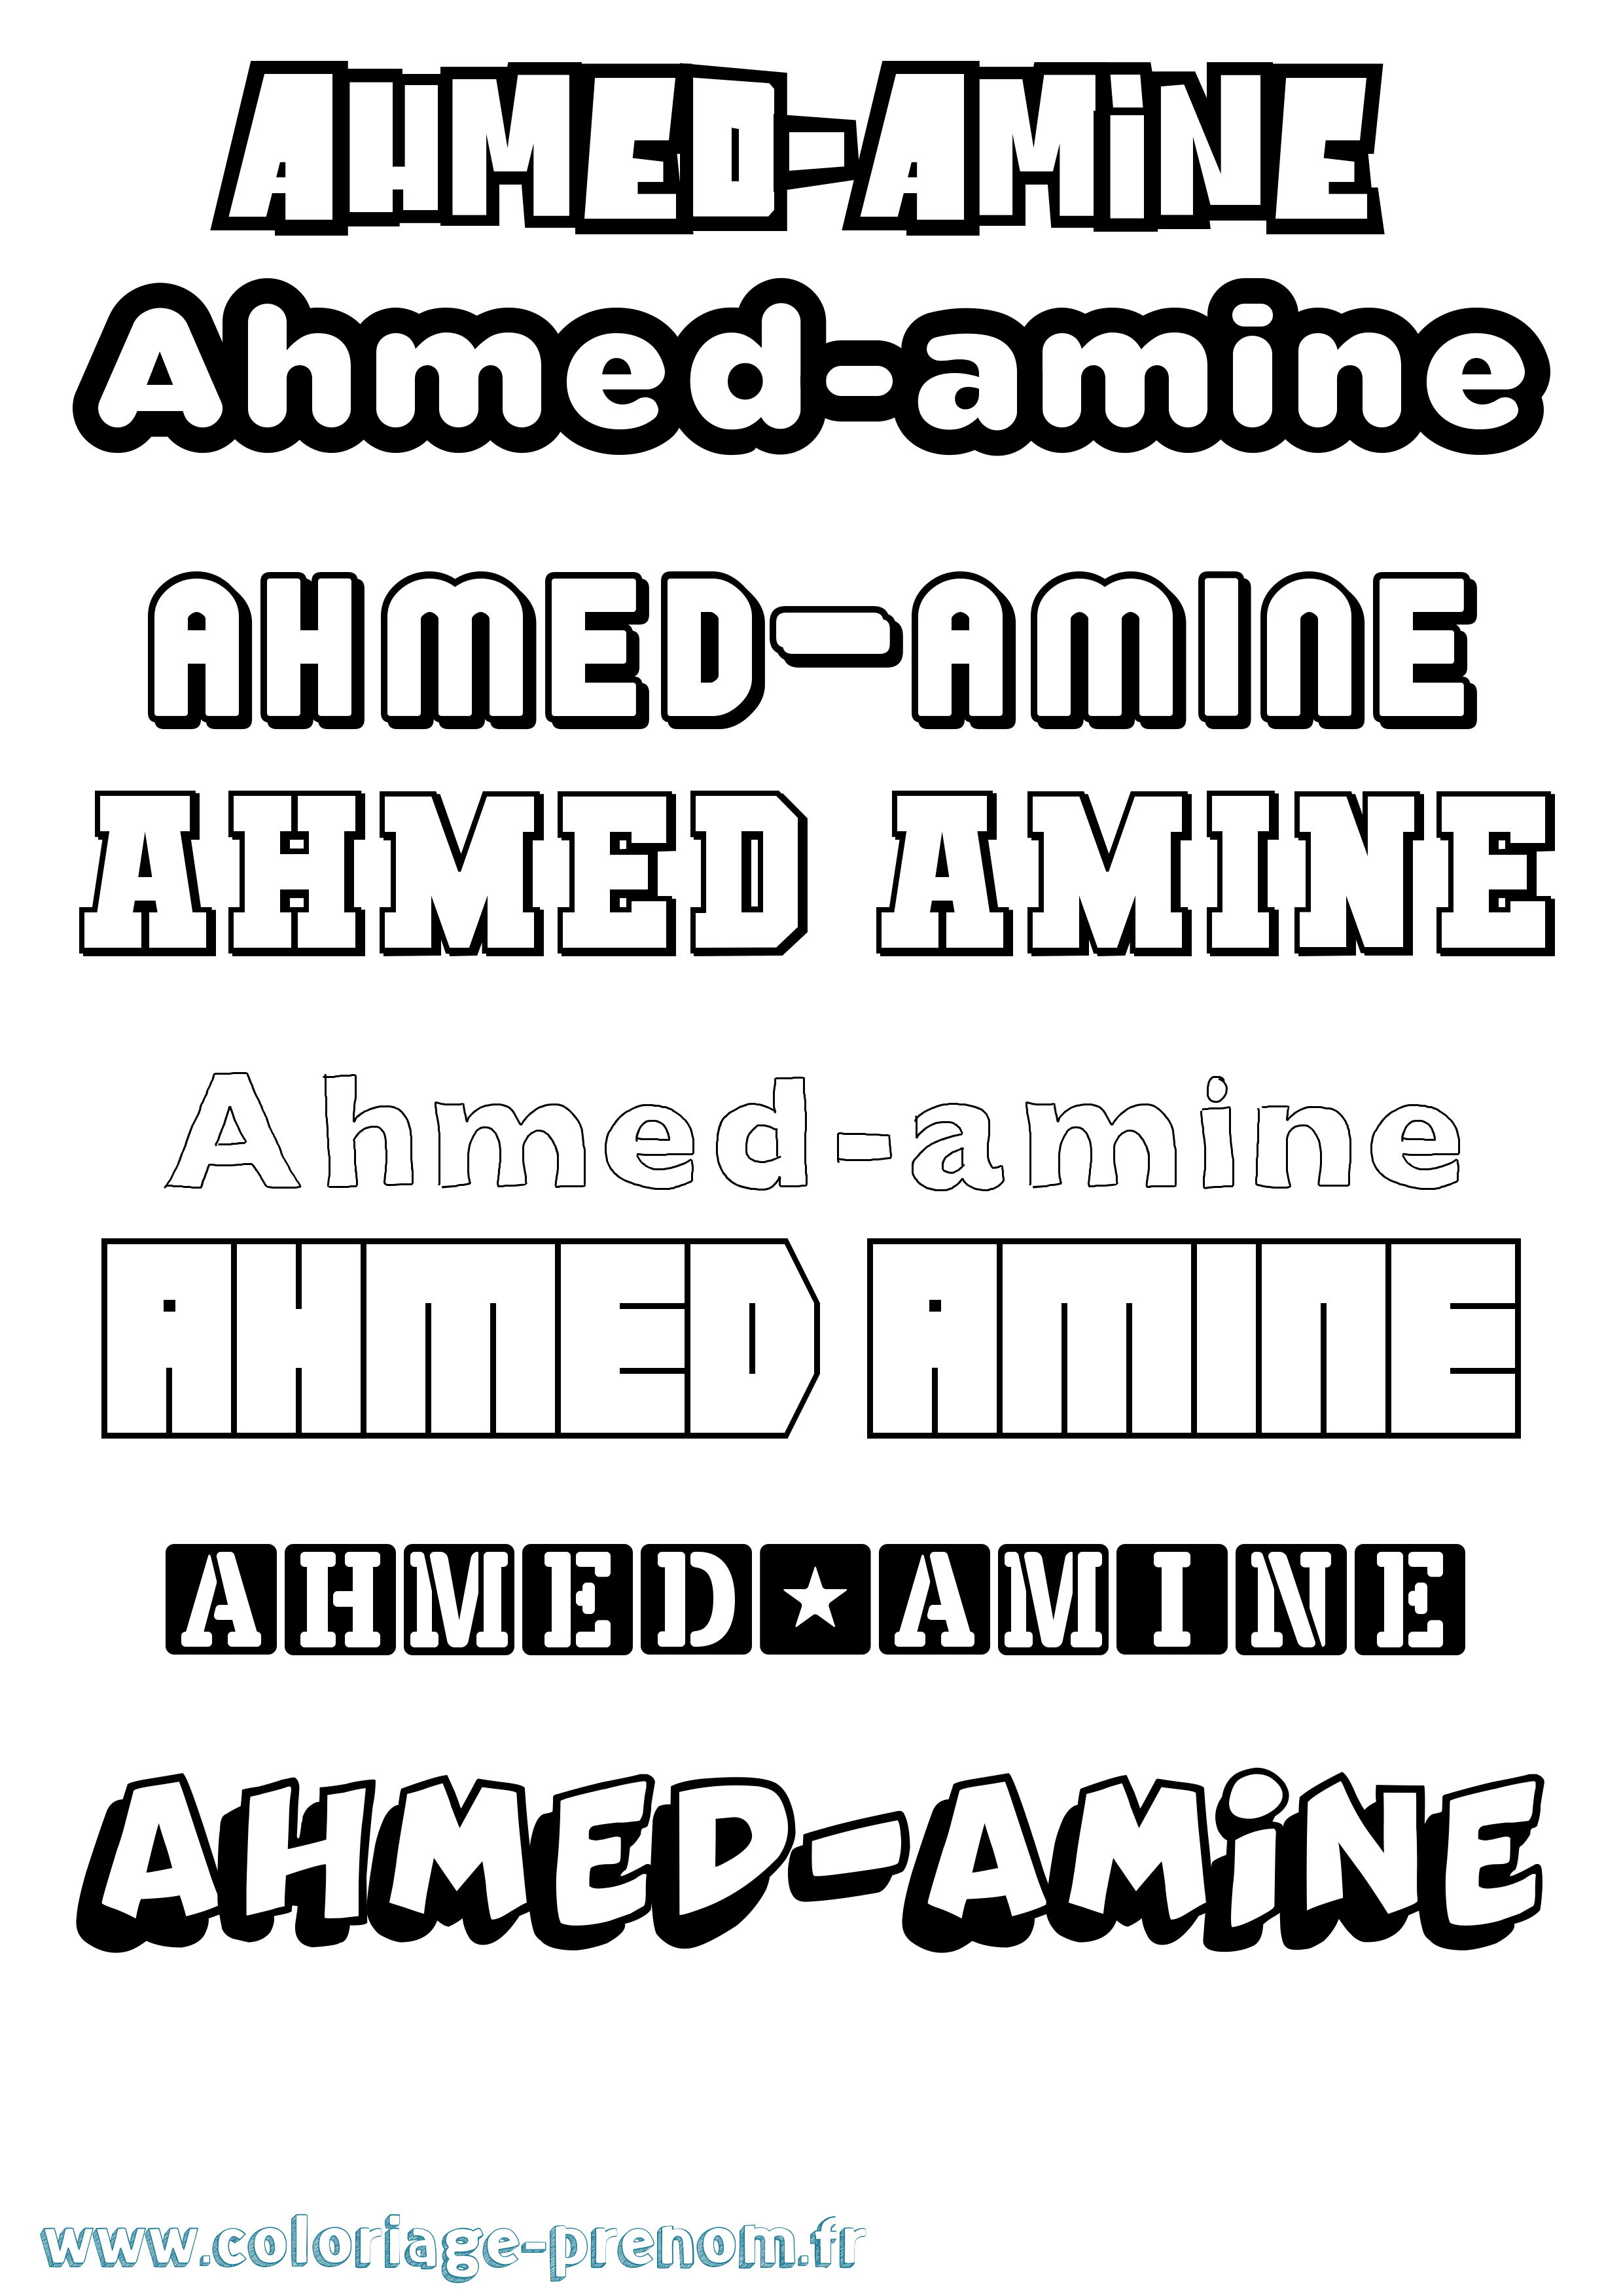 Coloriage prénom Ahmed-Amine Simple